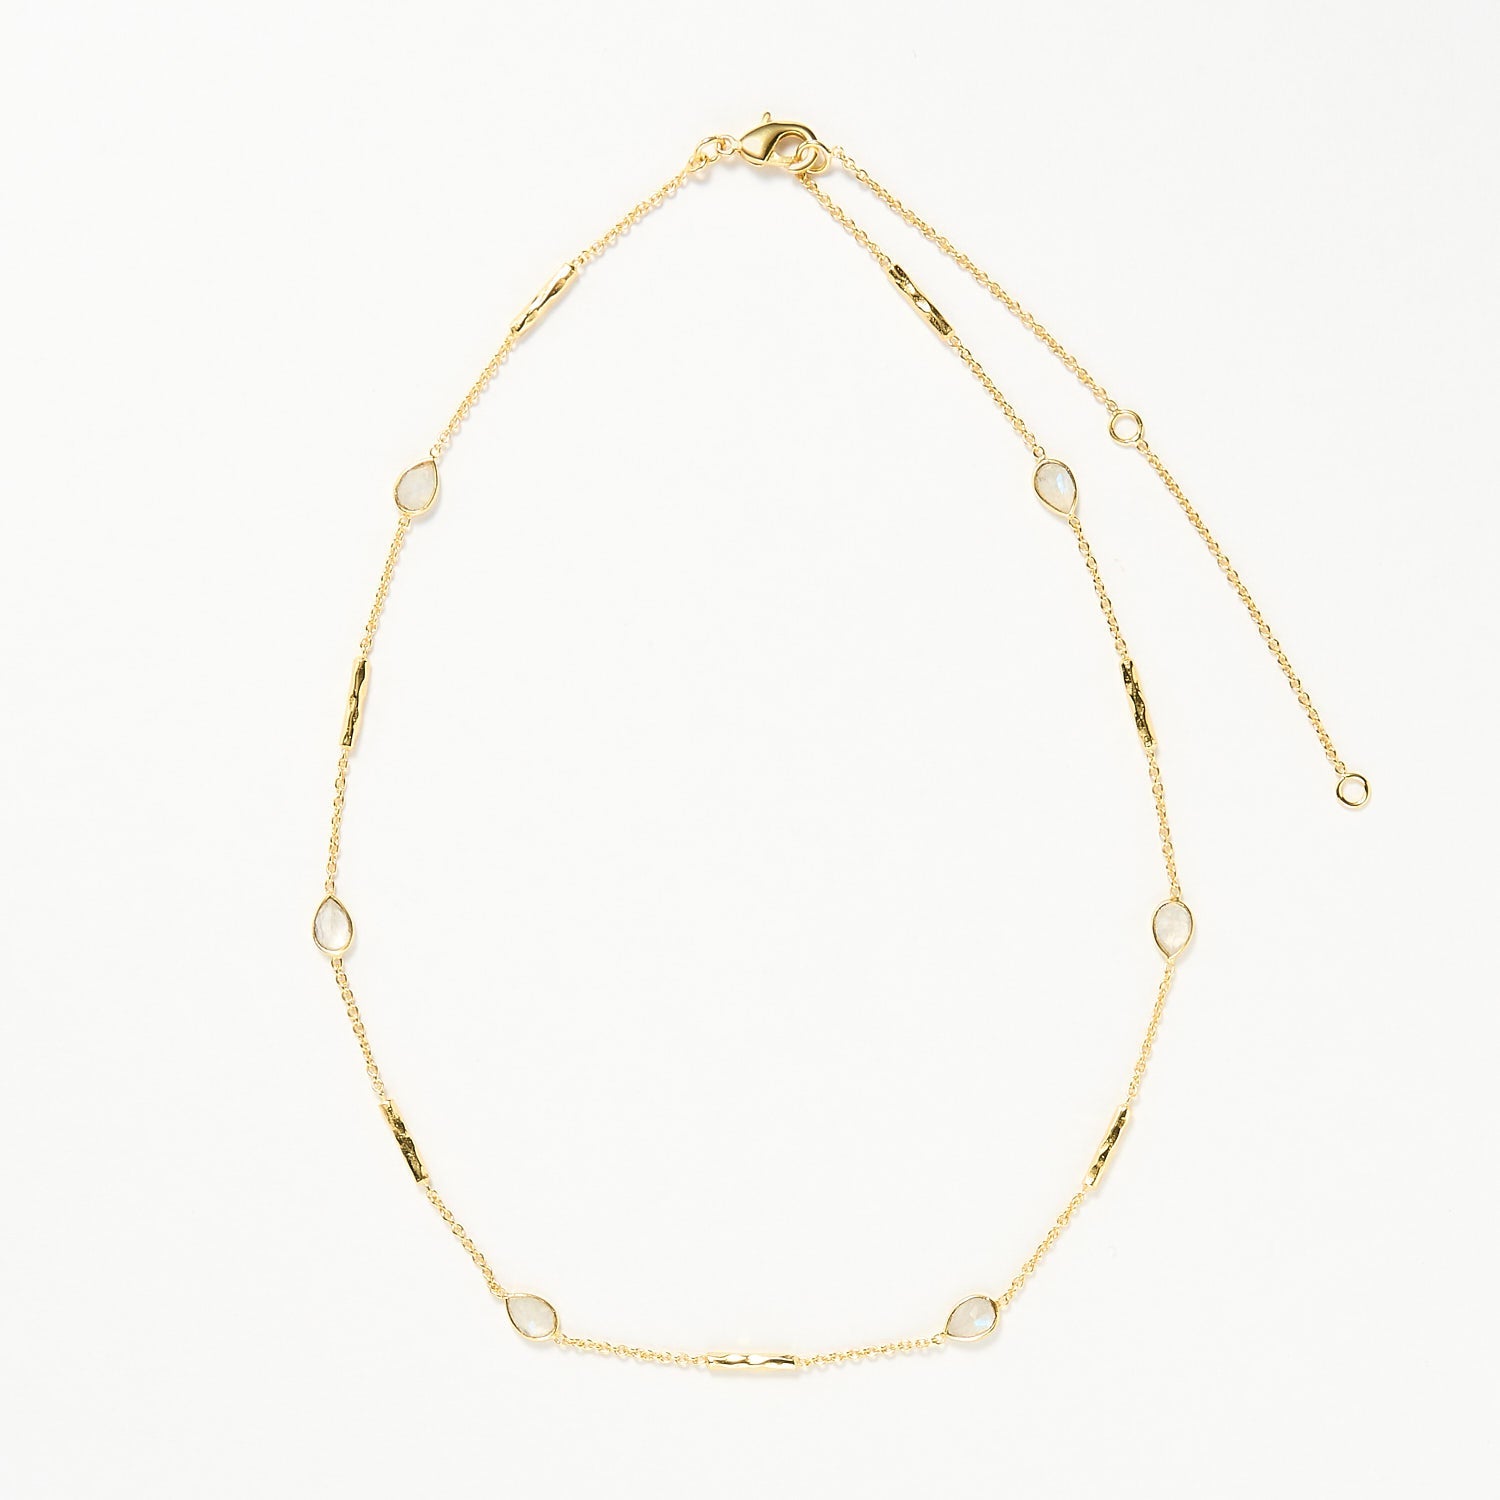 Maldives necklace - Moonstone, Gold 